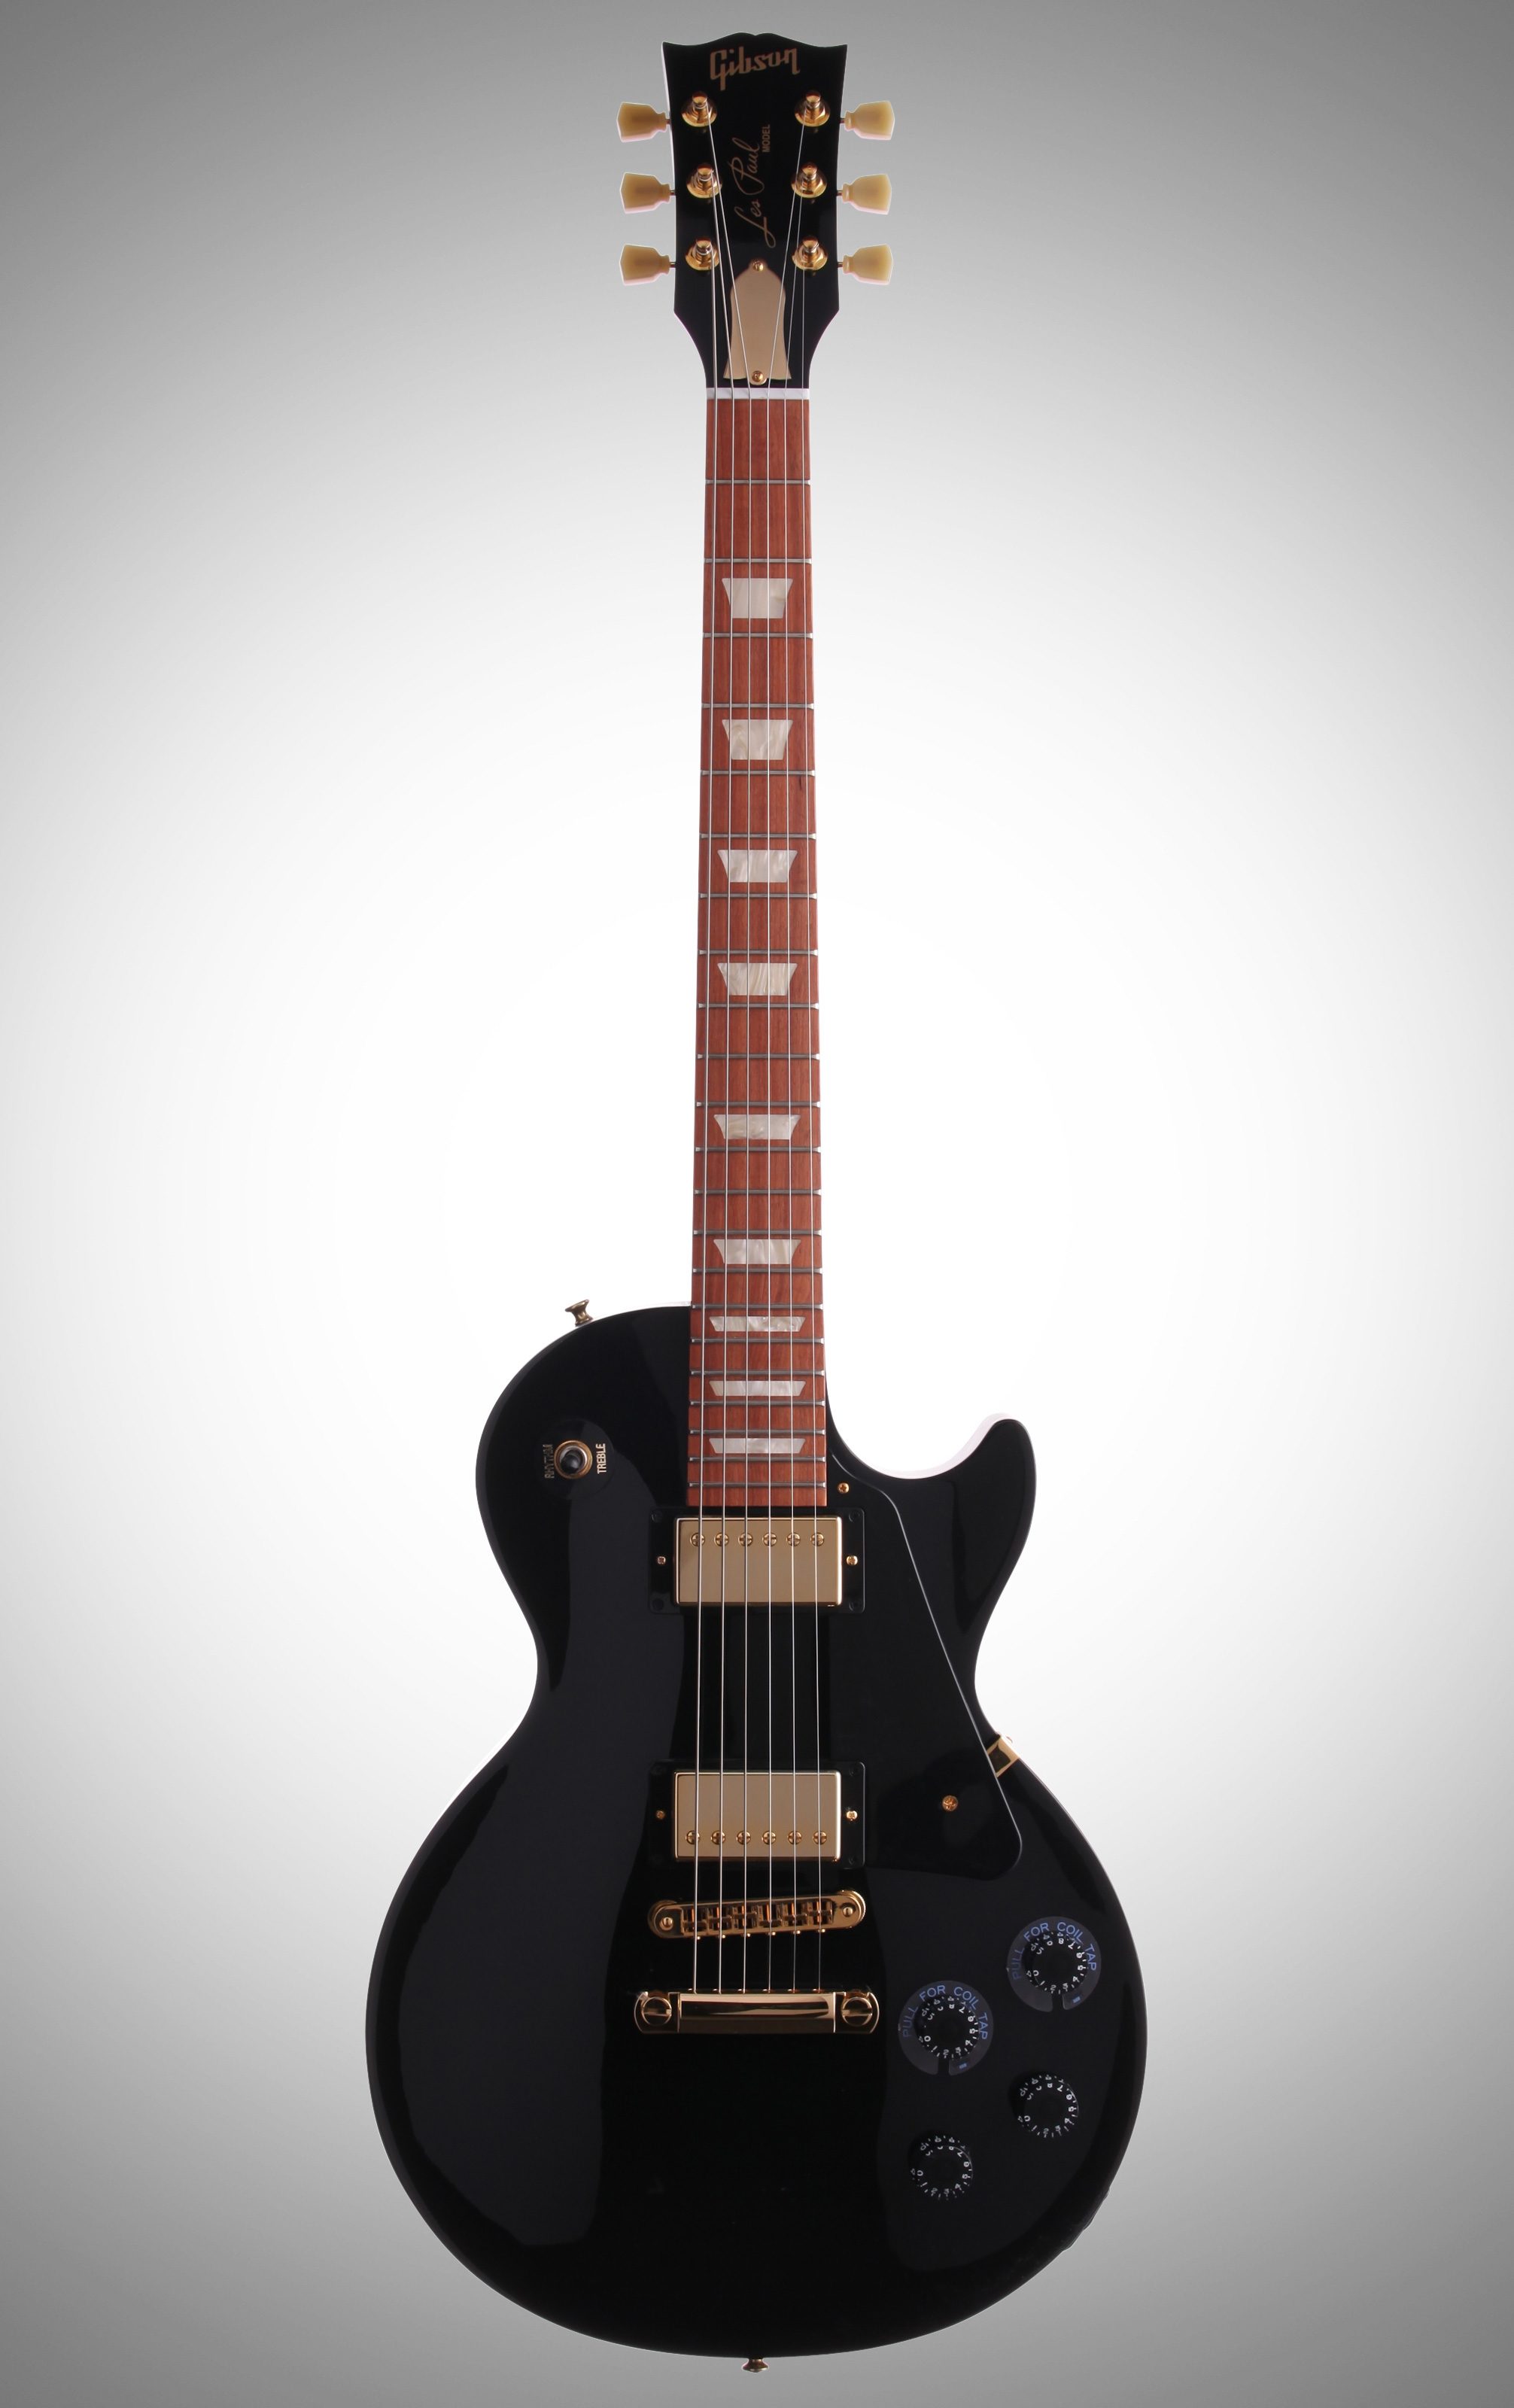 Gibson 2013 Les Paul Studio Electric Guitar | zZounds